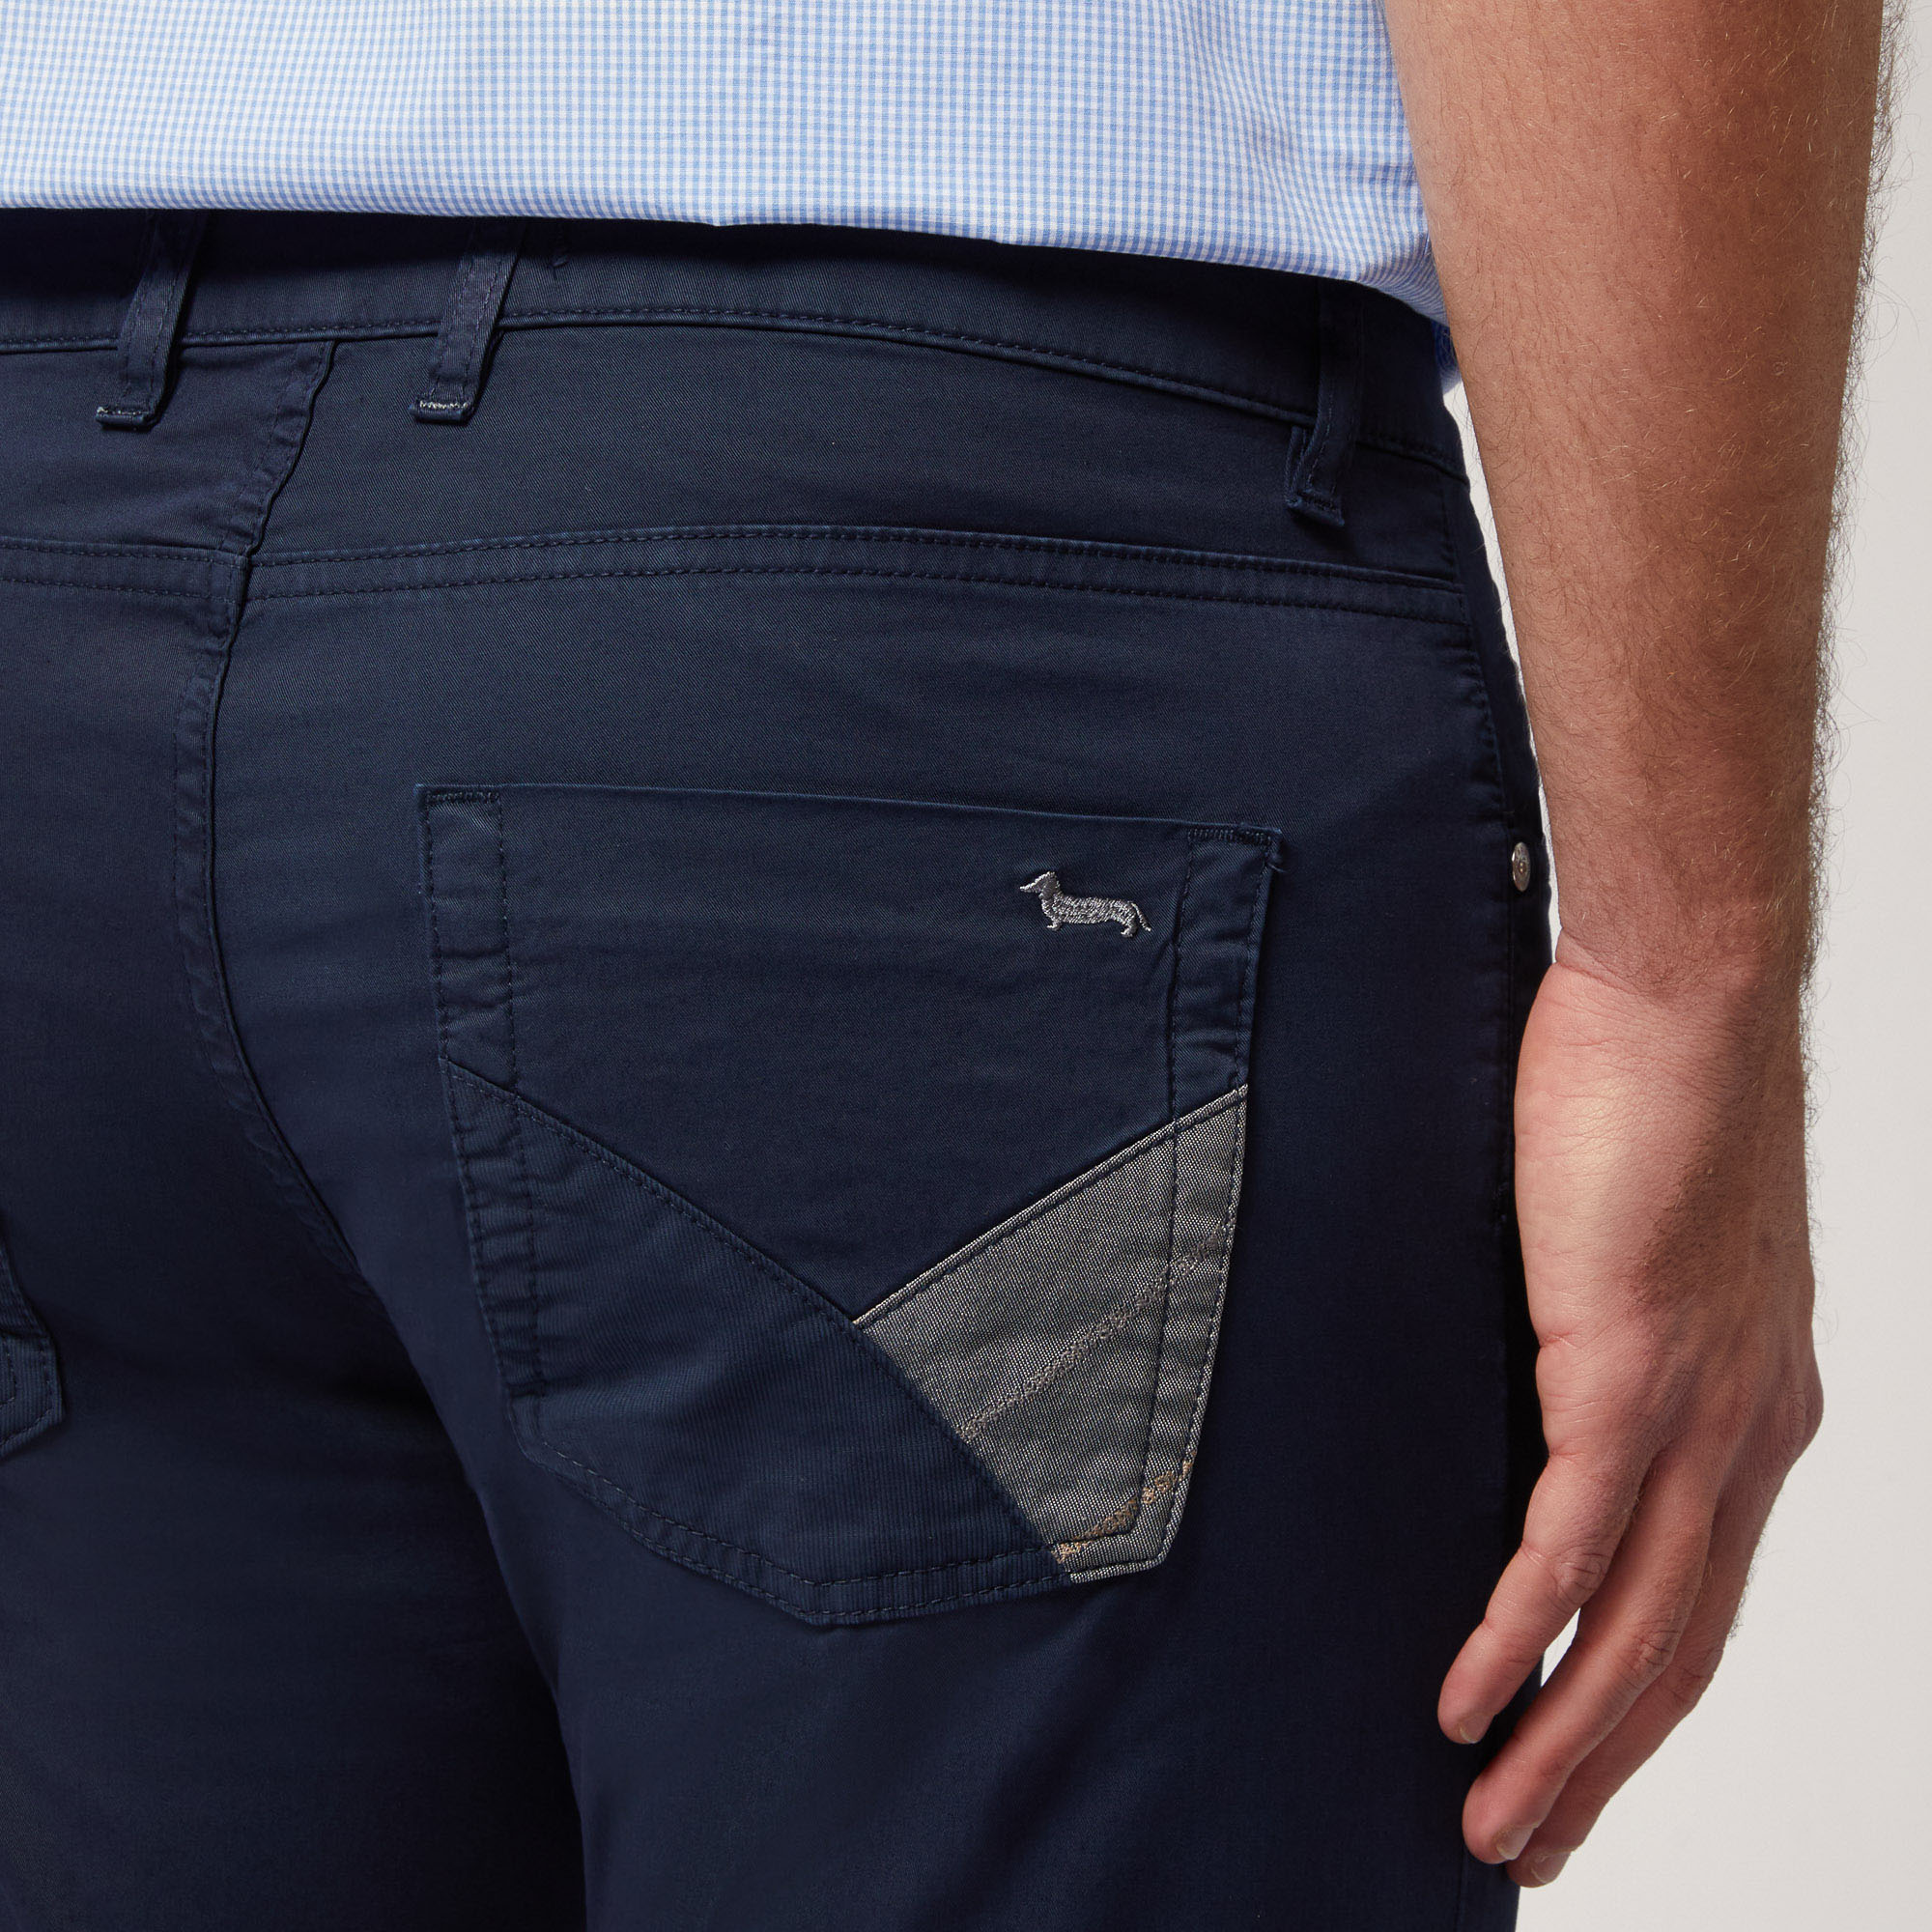 Pantaloni Con Inserti, Blu Navy, large image number 2